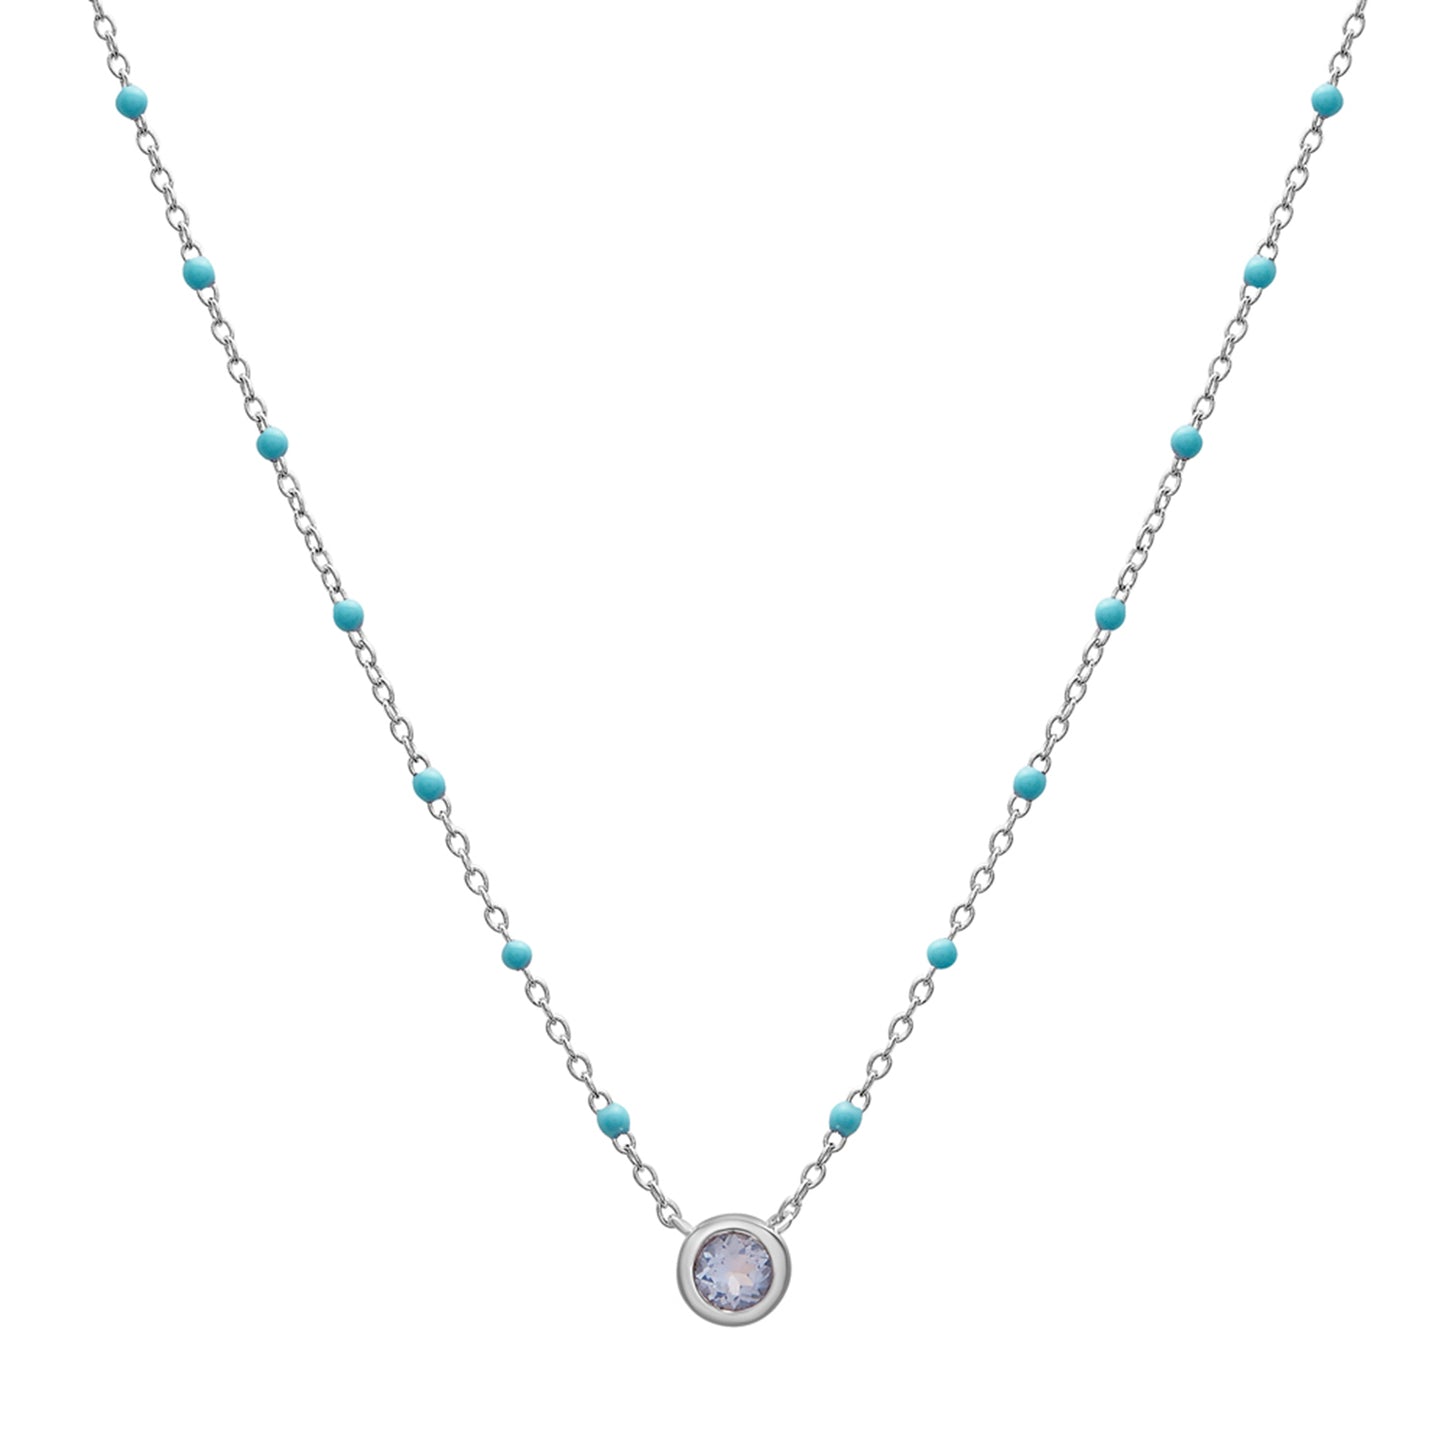 Birthstone Enamel Necklaces in Light blue stone